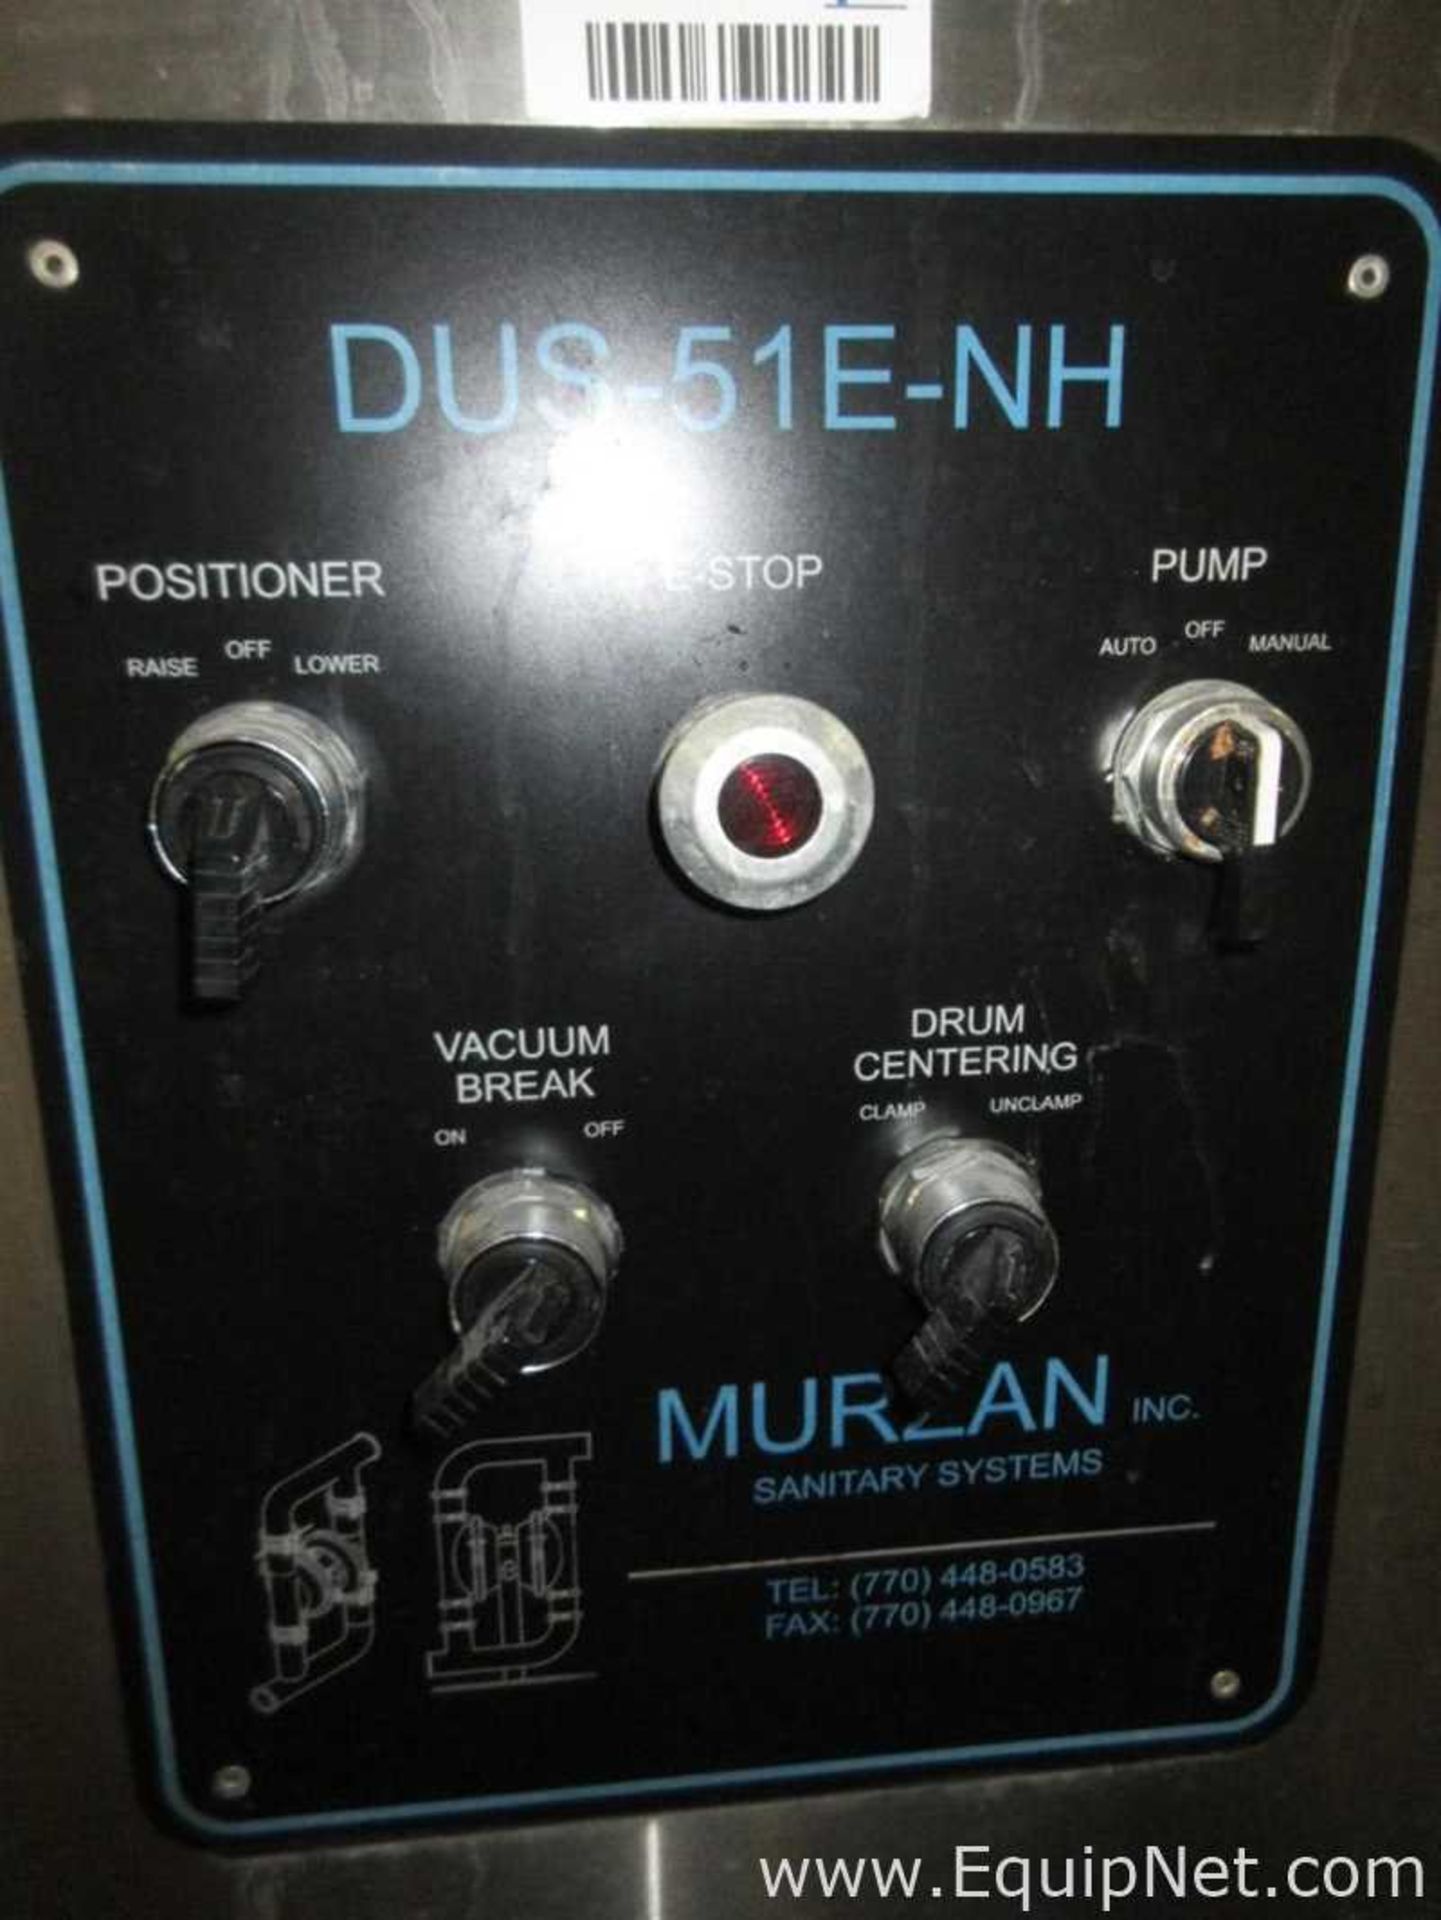 Murzan DUS 51E NH Drum Unloading System